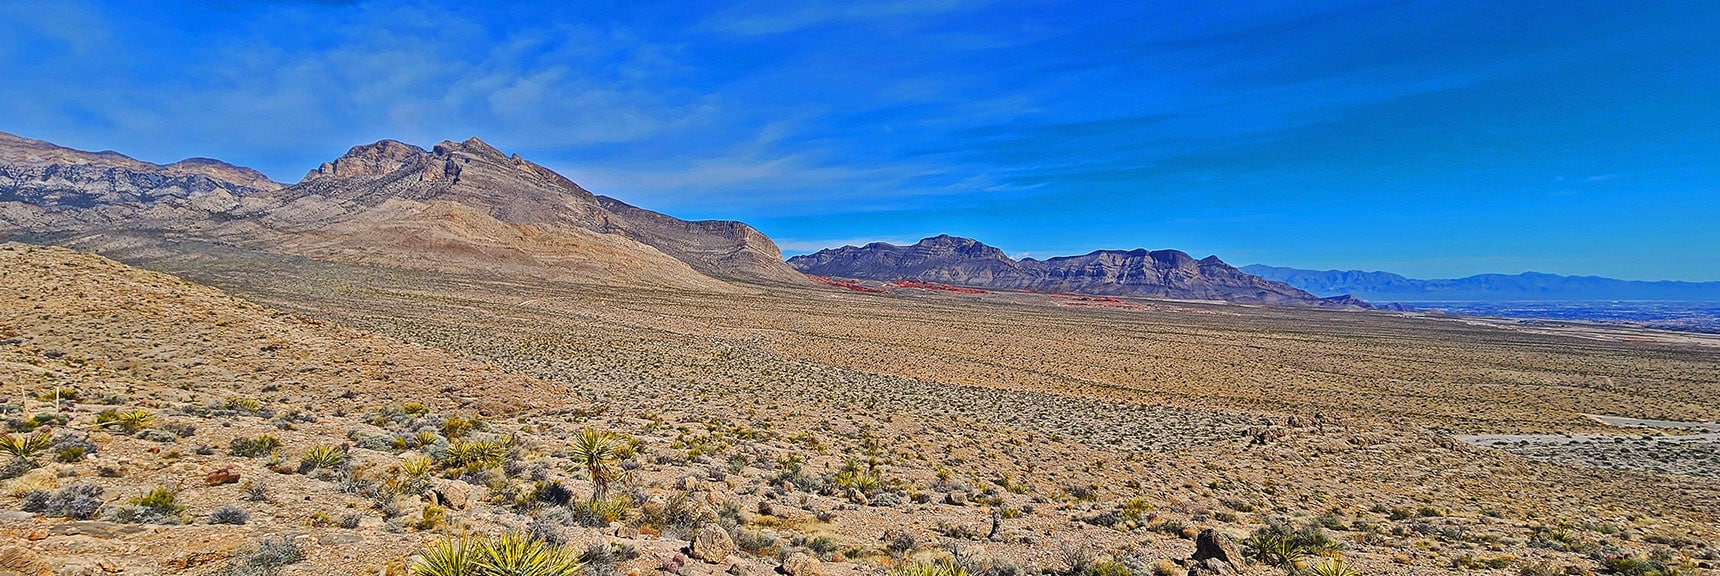 Overlook Brownstone Basin and Las Vegas Valley to the East. | Gray Cap Ridge / Brownstone Basin Loop | La Madre Mountains Wilderness, Nevada